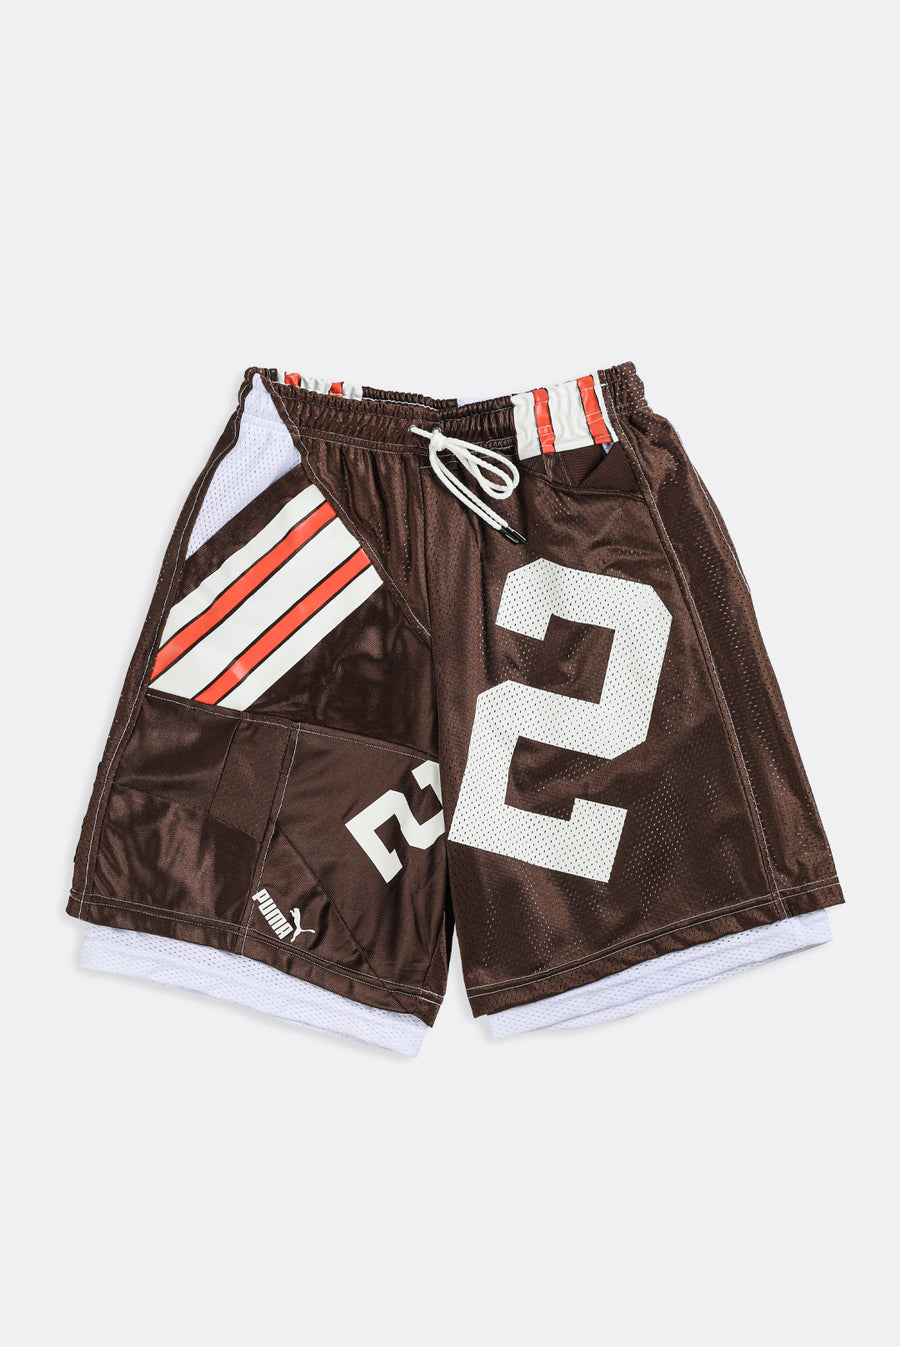 Unisex Rework Browns NFL Jersey Shorts - Women-S, Men-XS